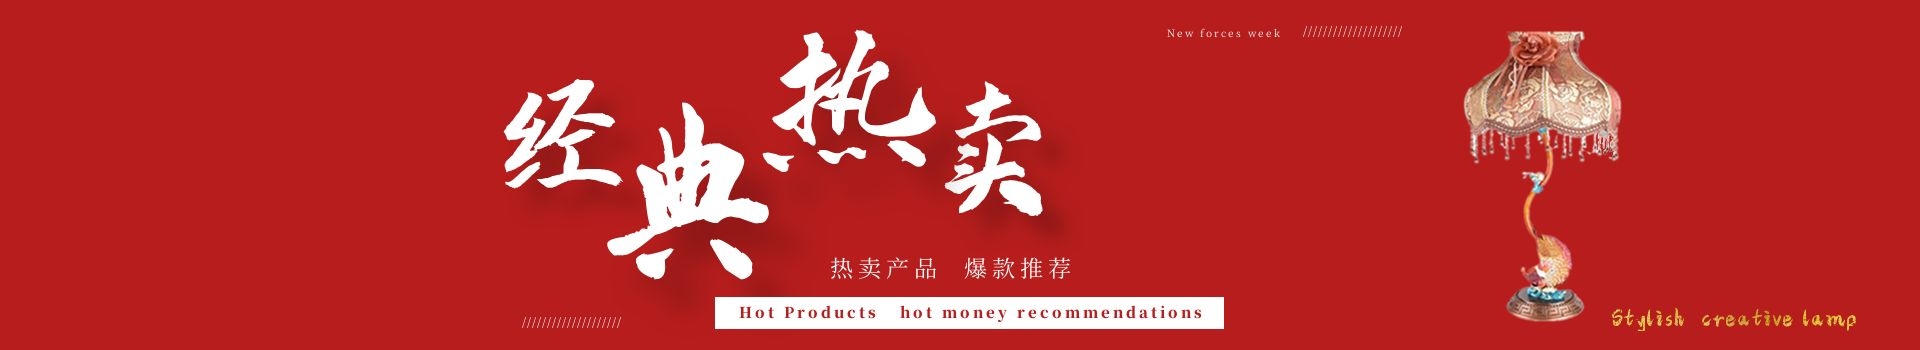 Dongguan xinzhirun Crafts Co., Ltd